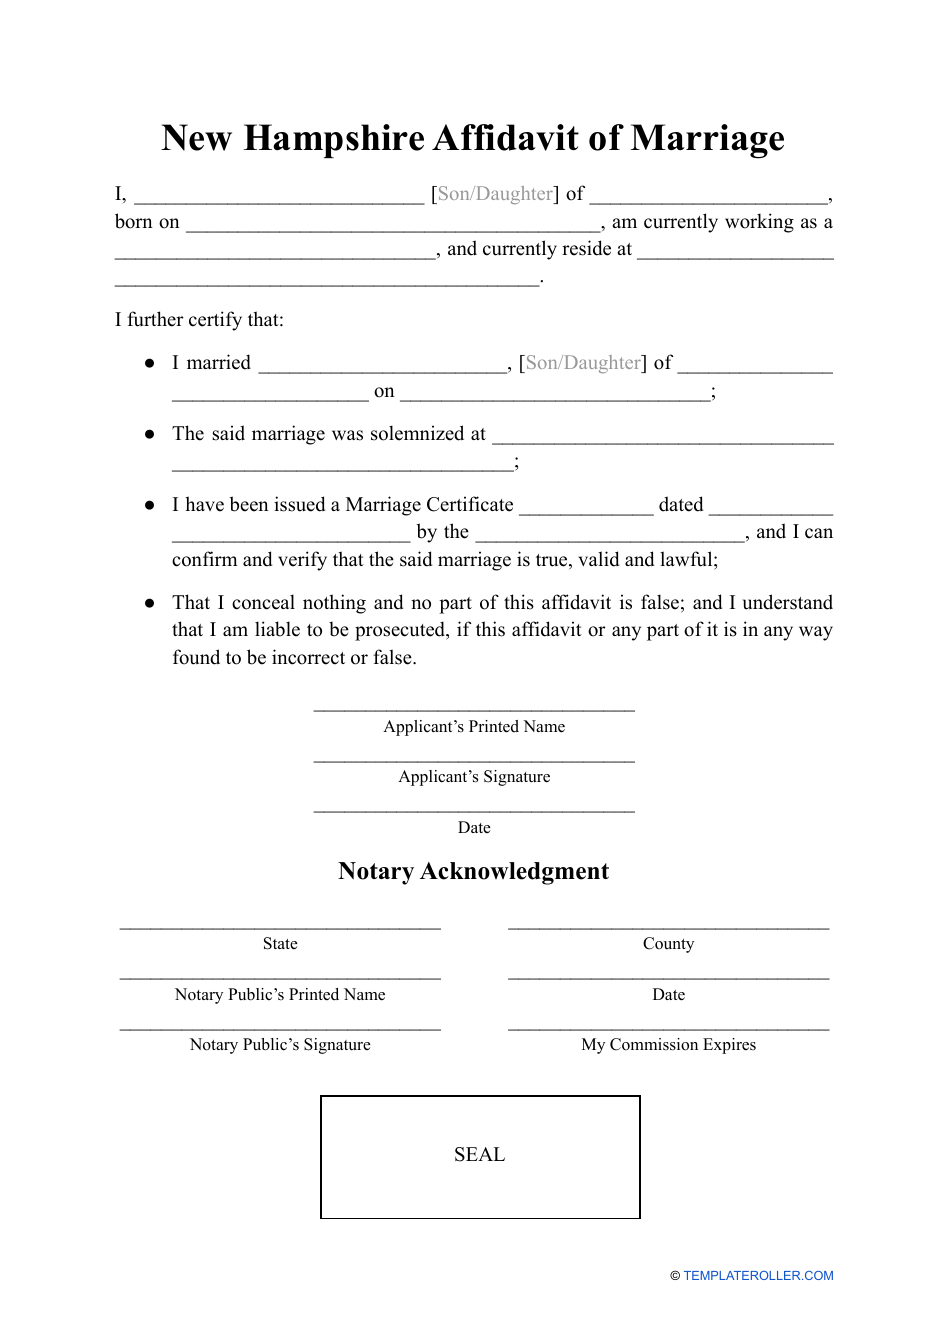 Affidavit of Marriage - New Hampshire, Page 1